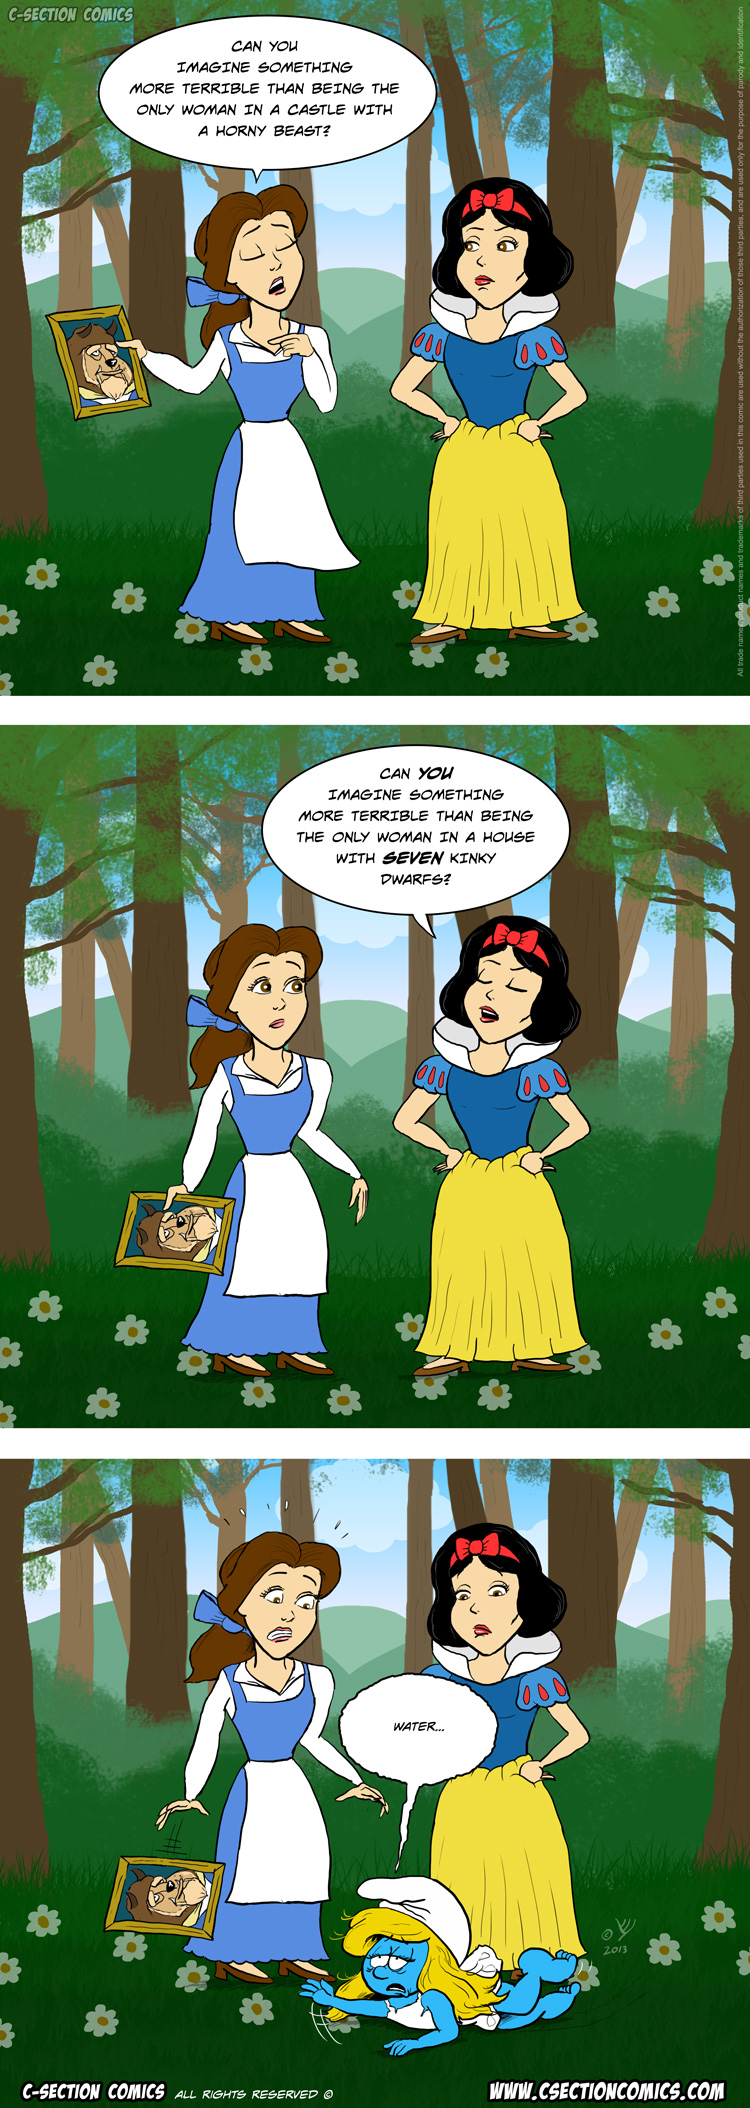 Belle vs. Snow White - Cartoon by C-Section Comics